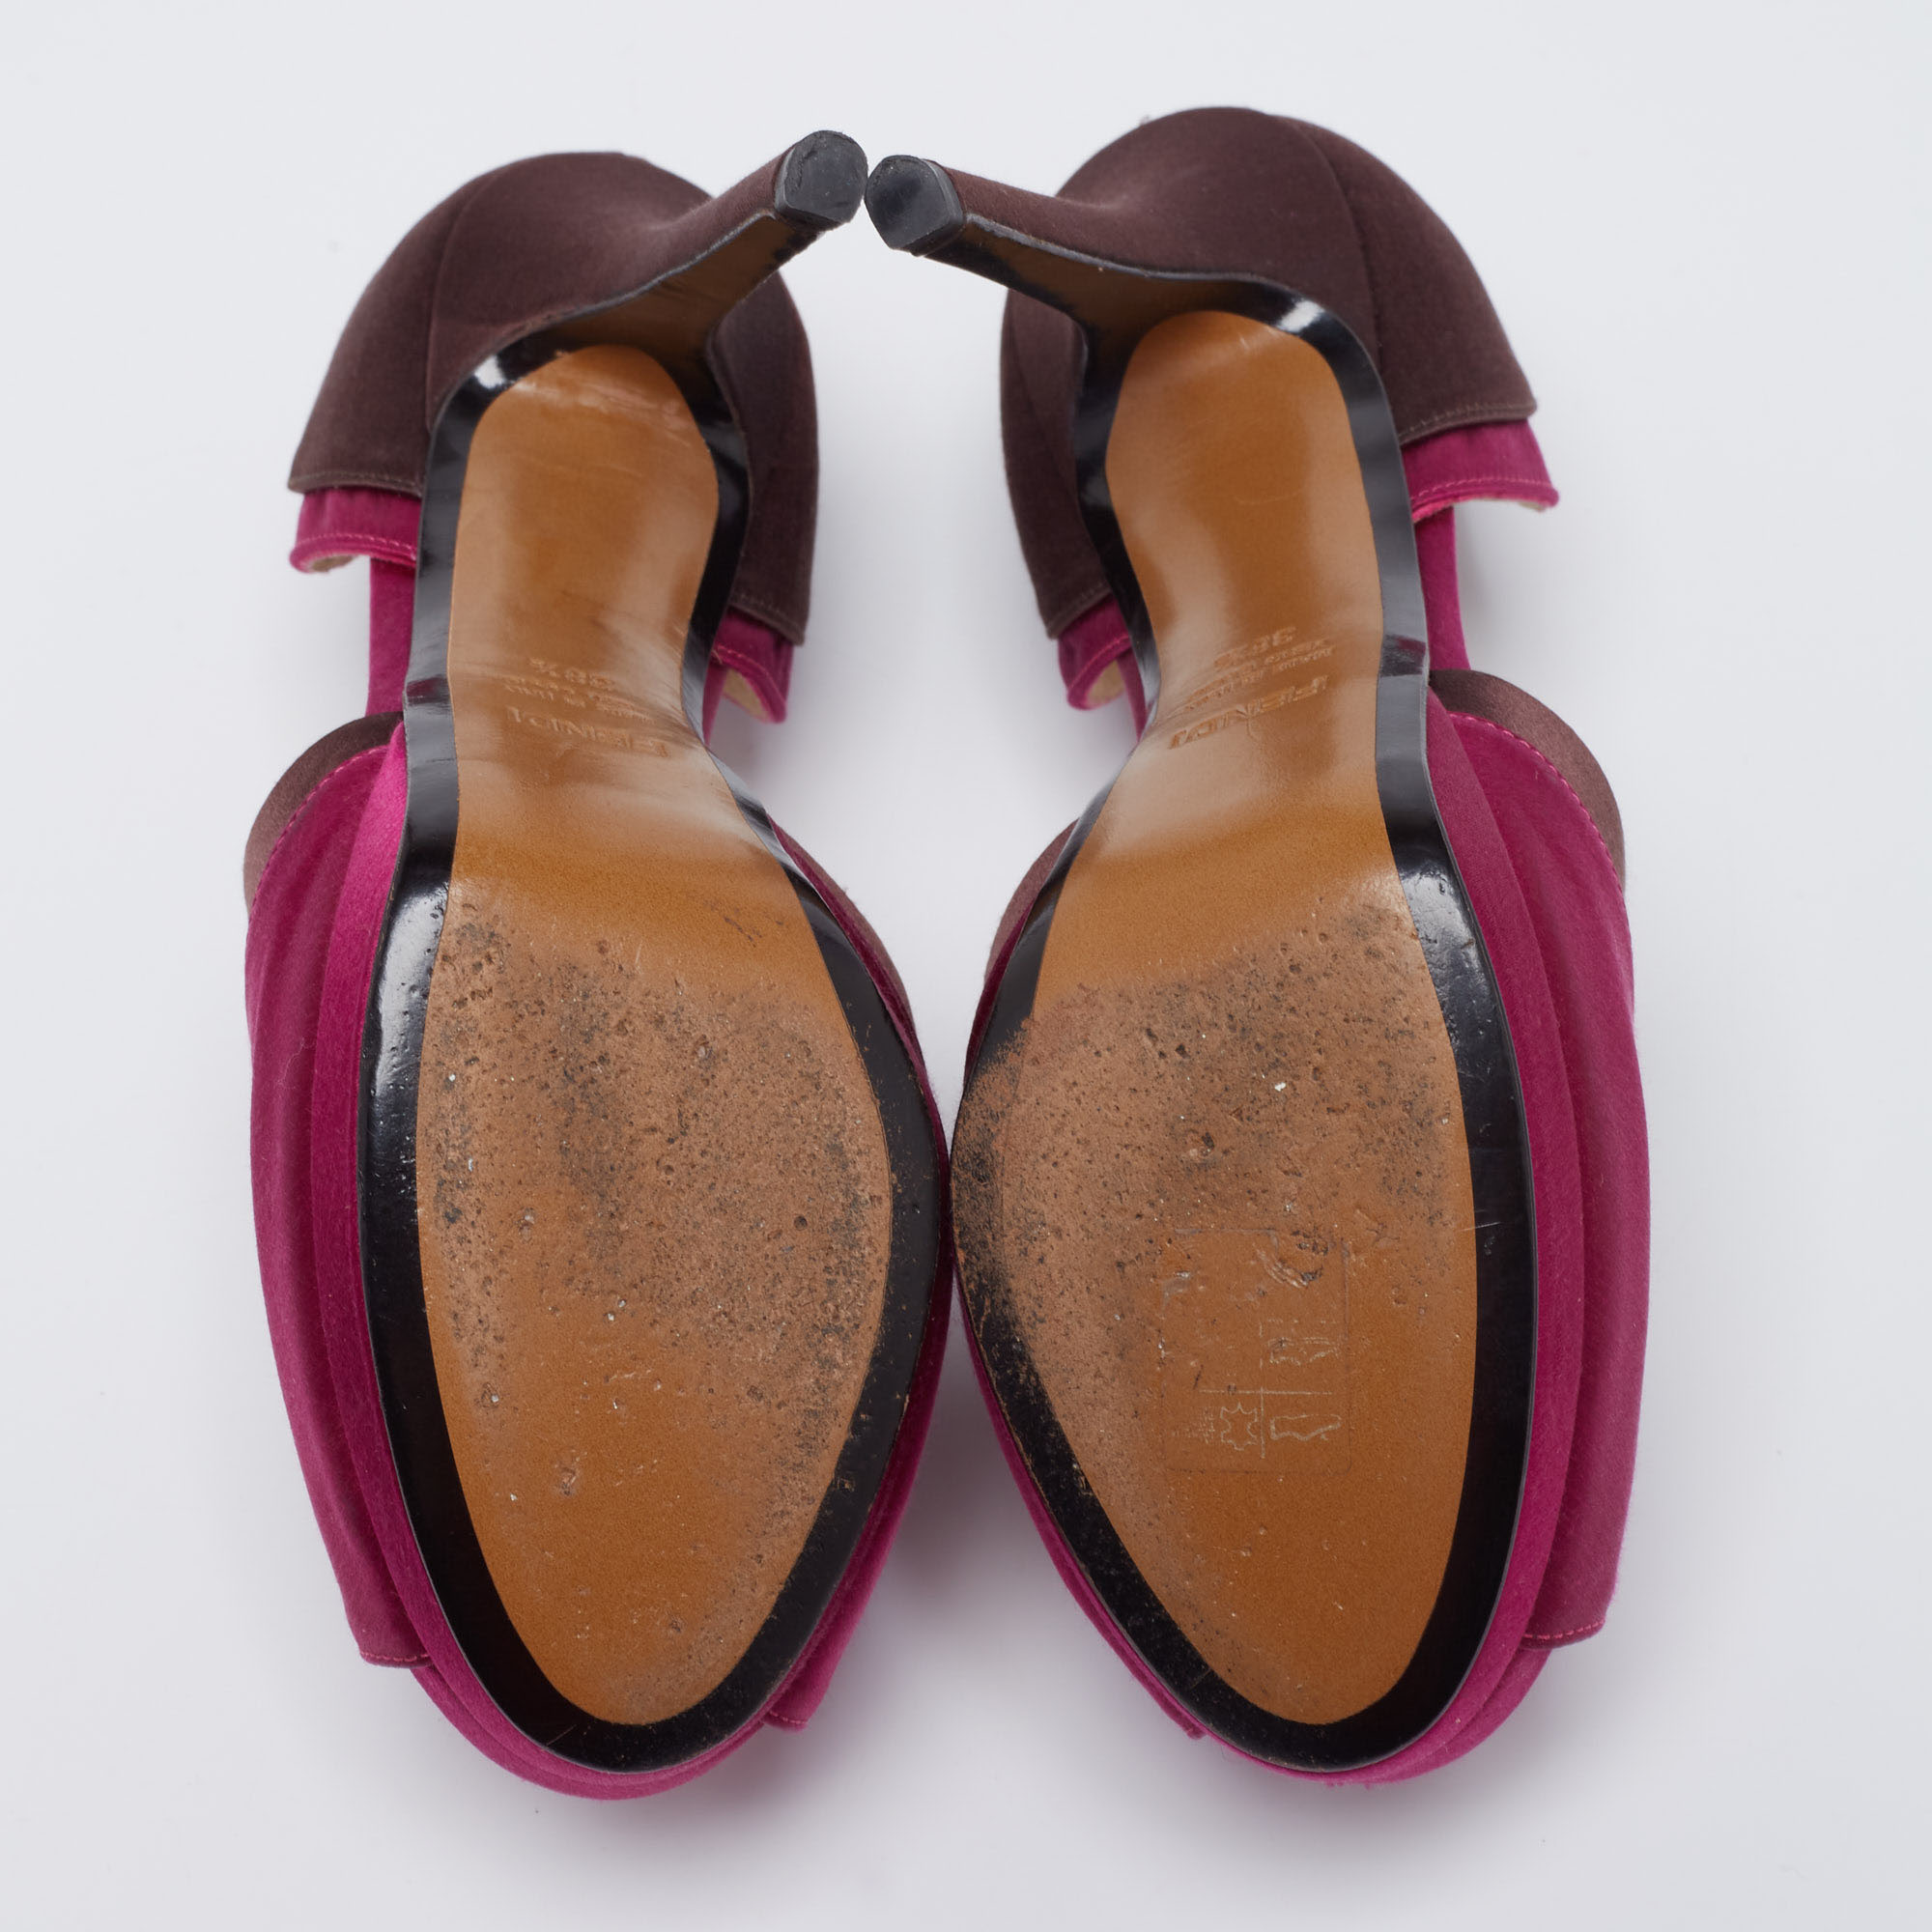 Fendi Magenta/Brown Satin Anemone D'orsay Peep-Toe Platform Pumps Size 38.5